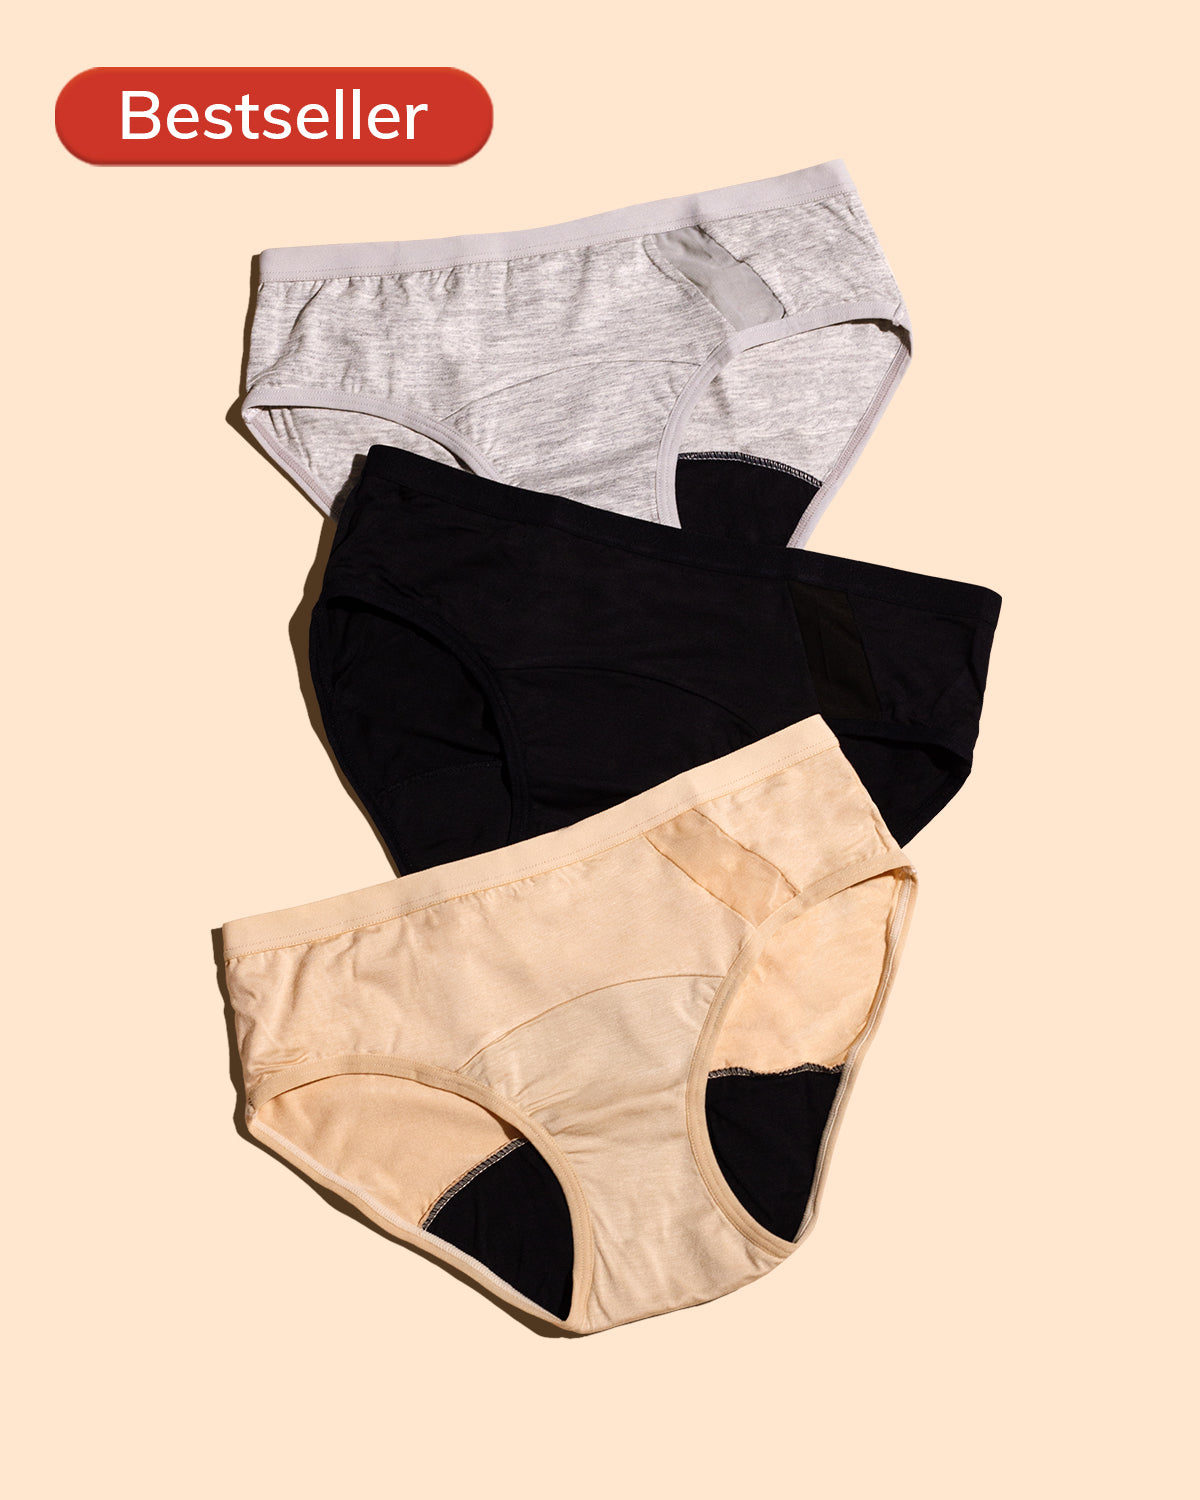 Women's Bamboo/Cotton High Leg Brief Style Underwear – Spun Bamboo